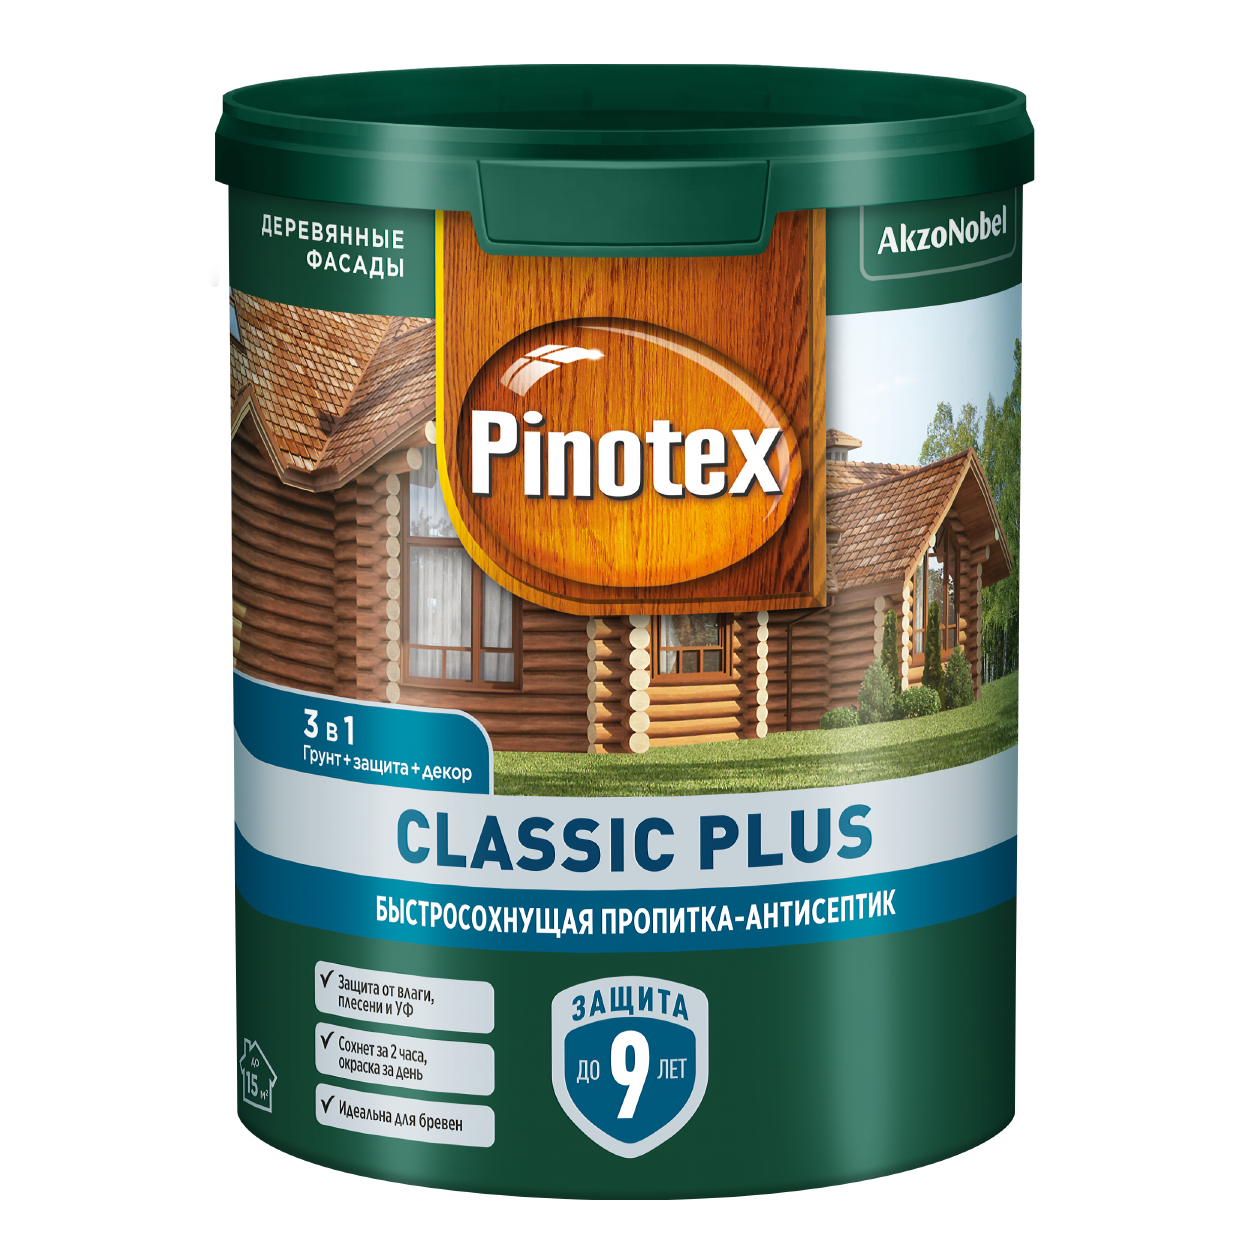 Пропитка pinotex classic plus. Pinotex Classic Plus 3 в 1. Pinotex Classic Plus тиковое дерево. Цвет палисандр для дерева пропитки Пинотекс. Пинотекс Скандинавский серый.